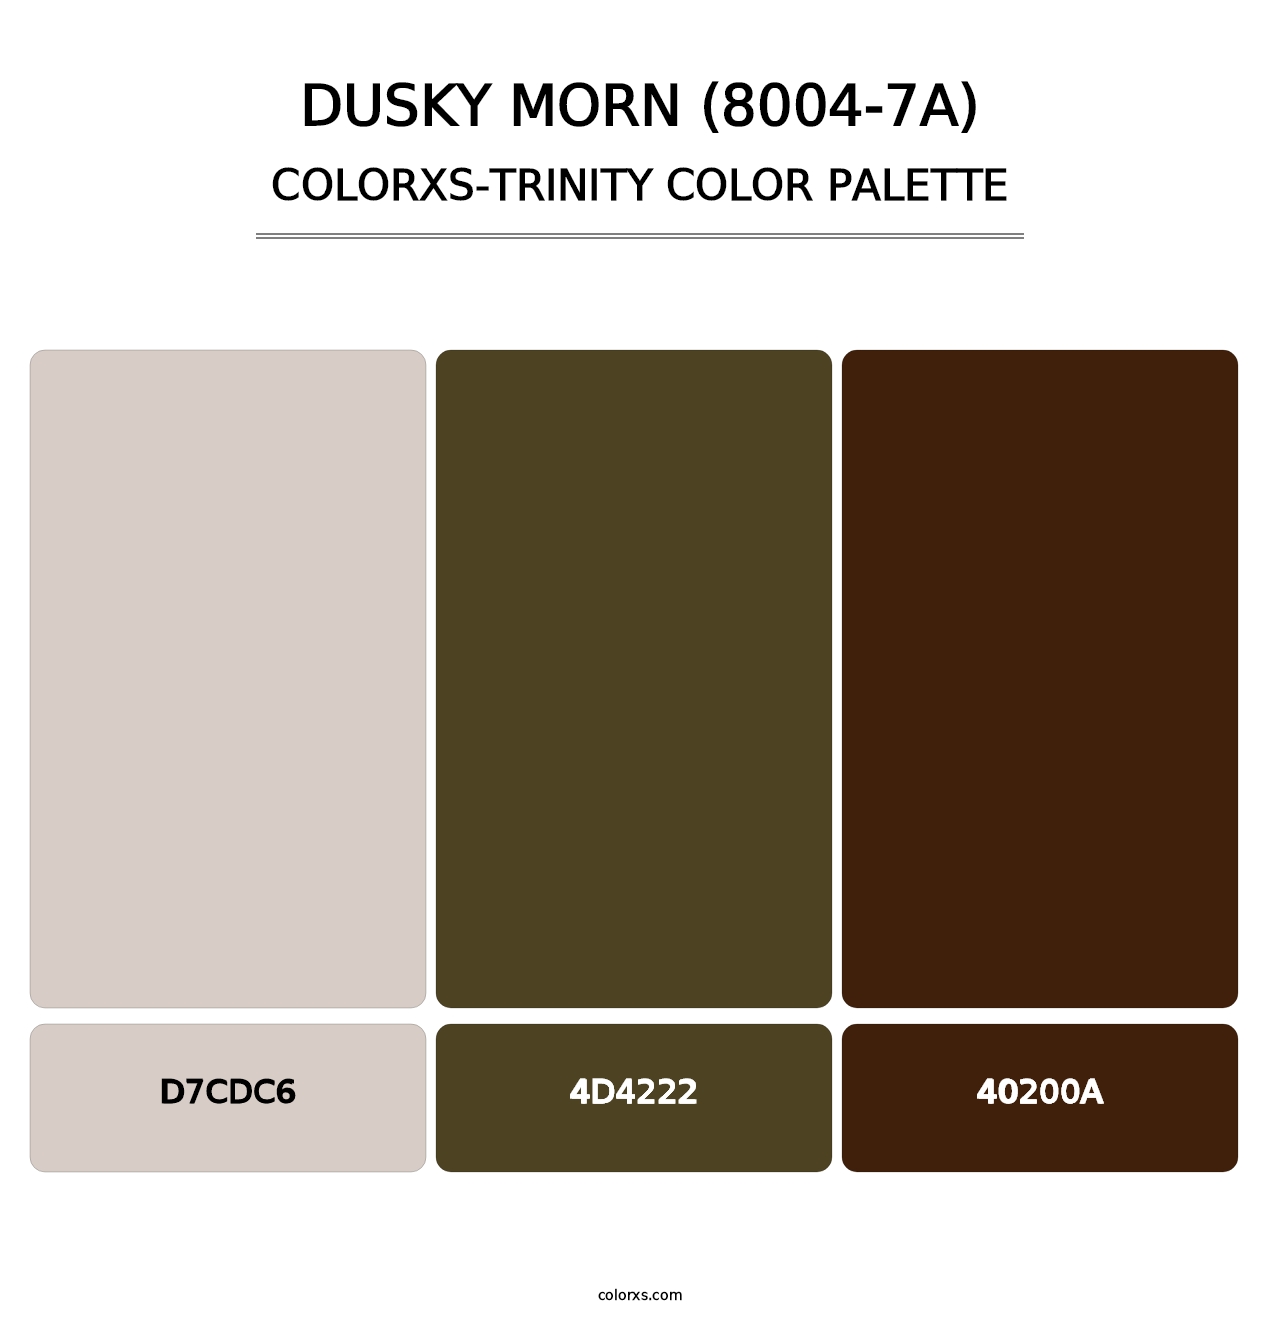 Dusky Morn (8004-7A) - Colorxs Trinity Palette